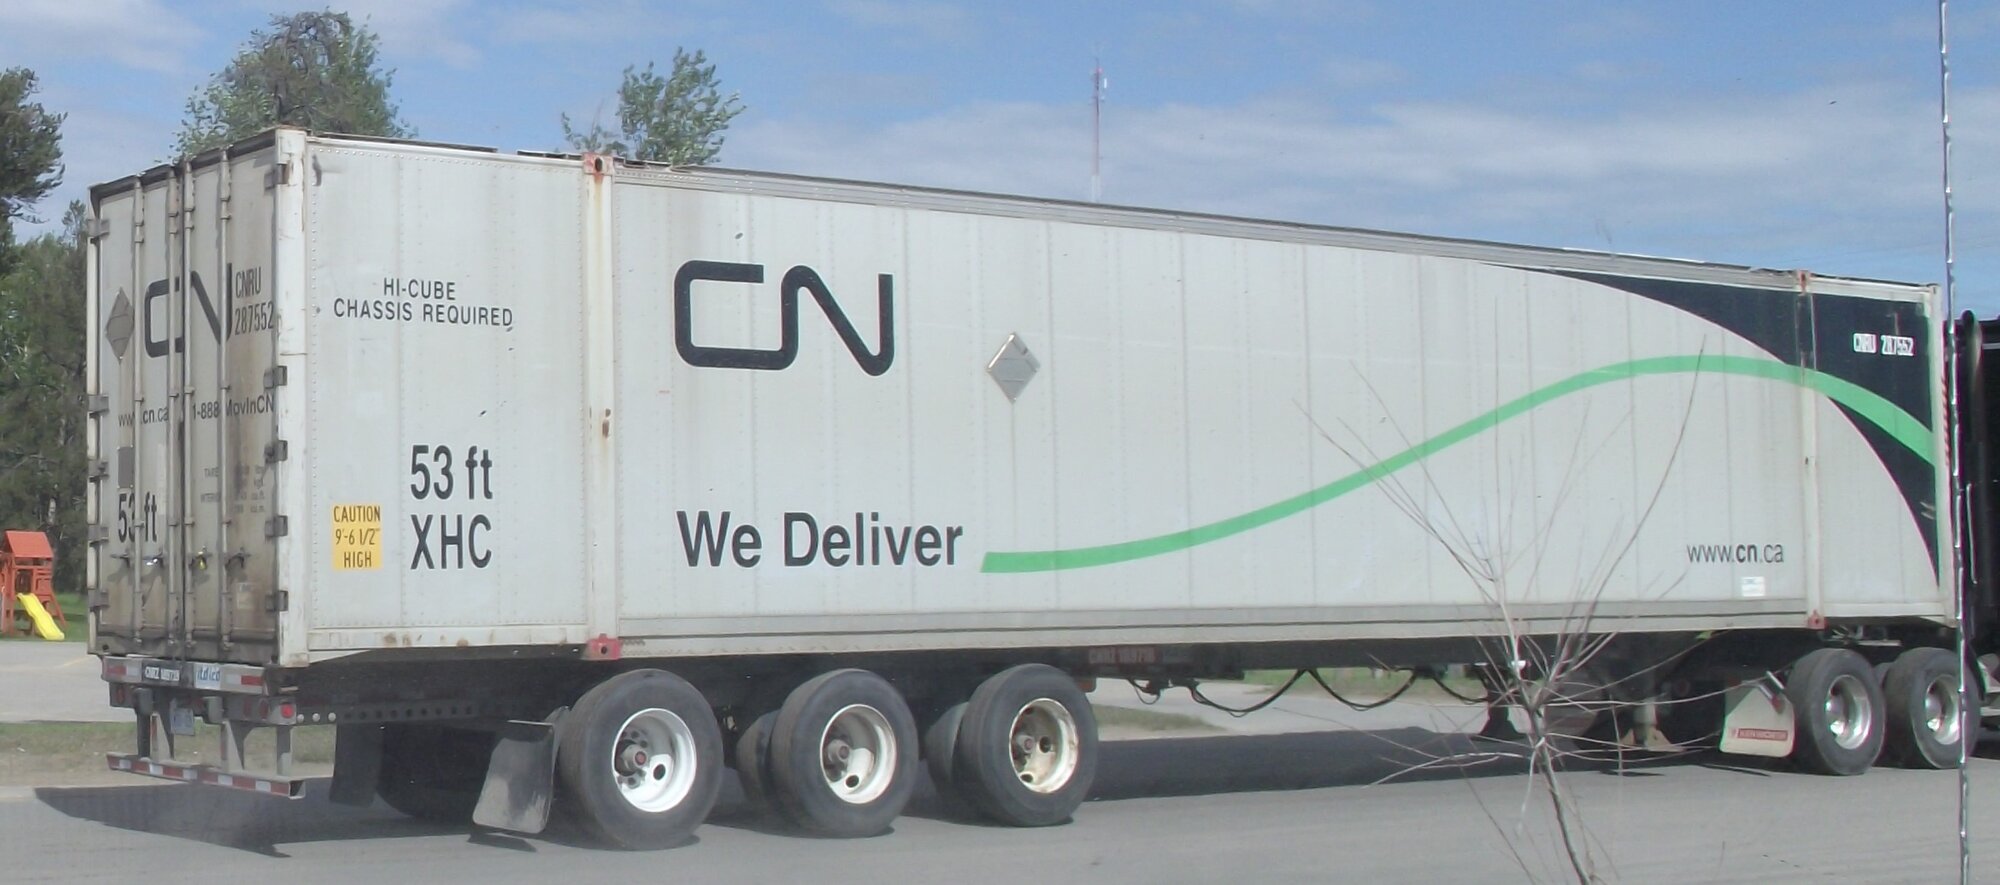 CN Tractor_06-15-2021 (3).jpg